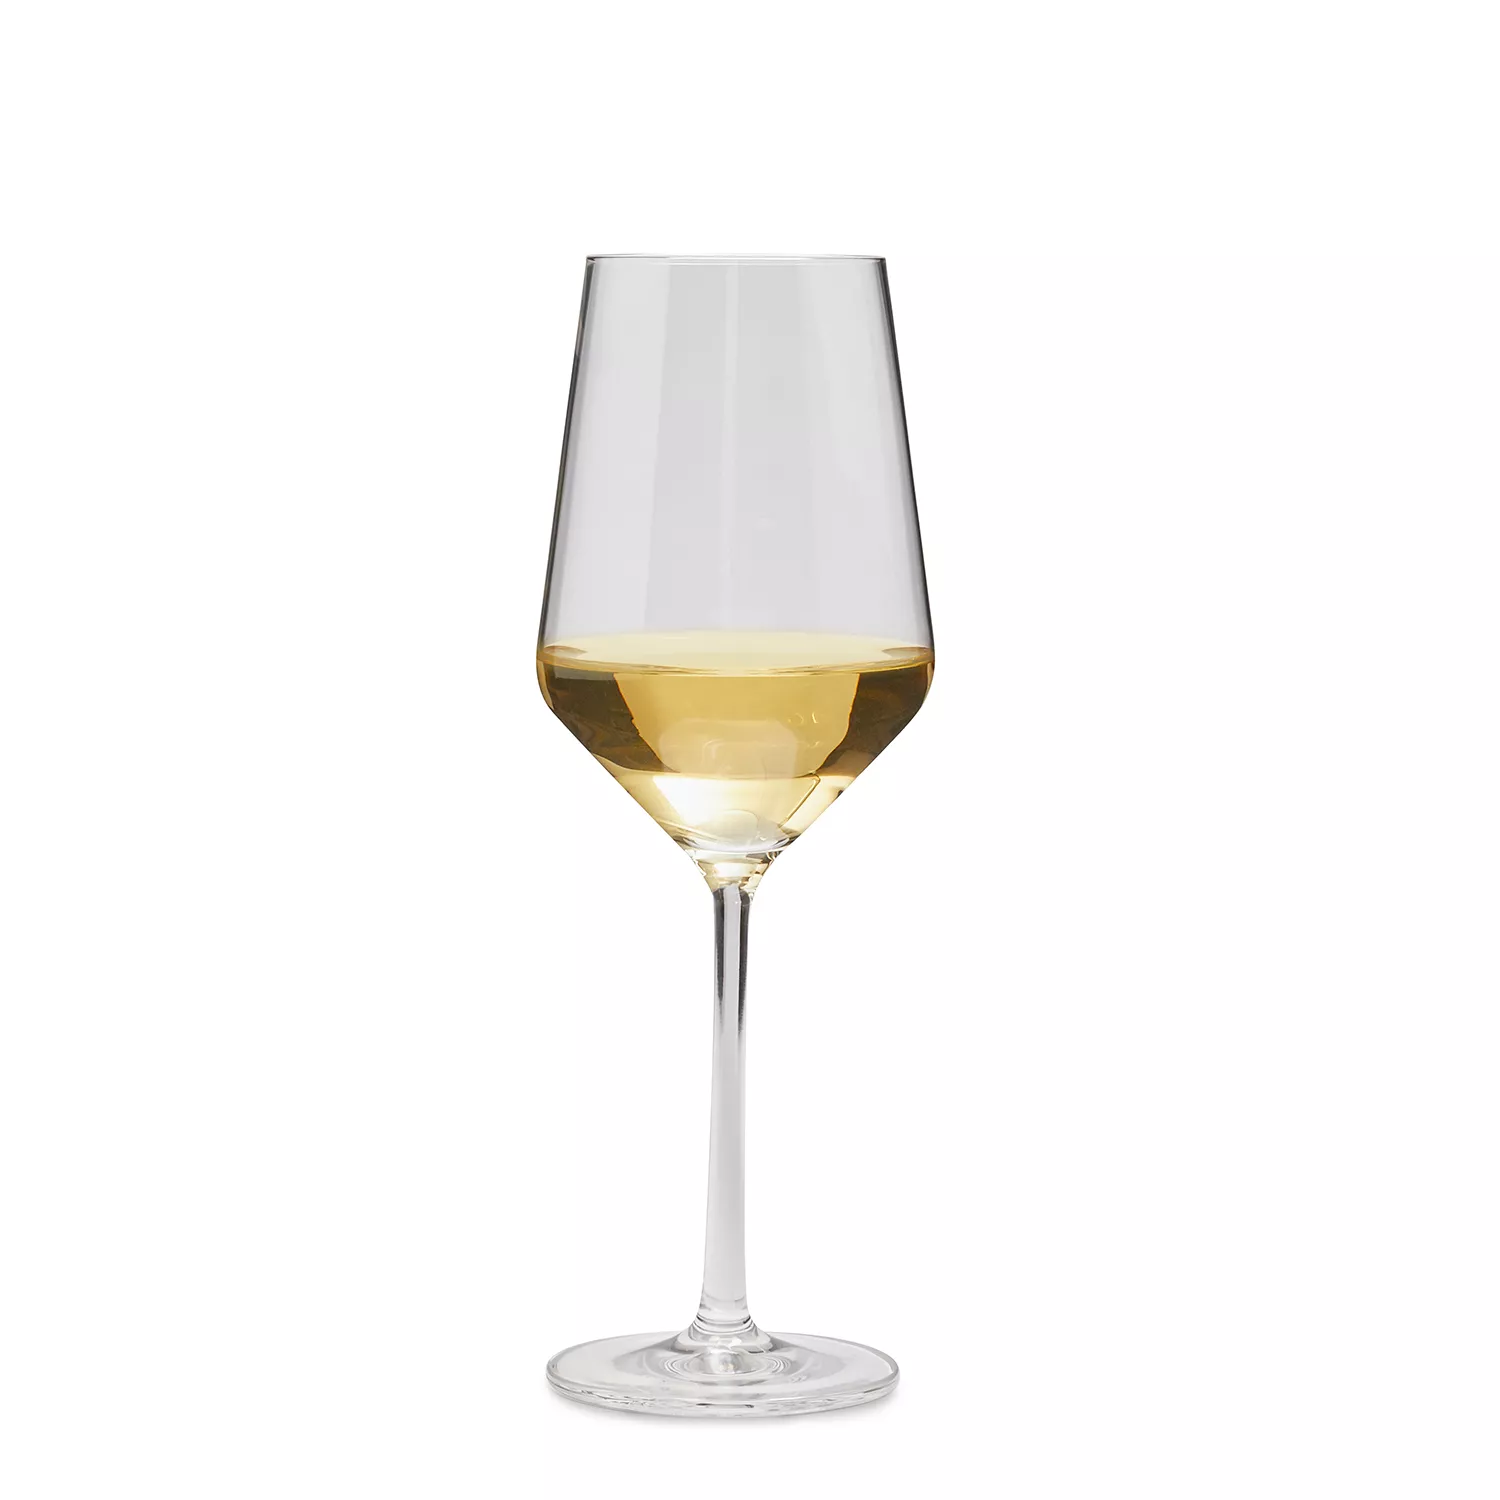 Schott Zwiesel Pure Light-Bodied White Wine Glass